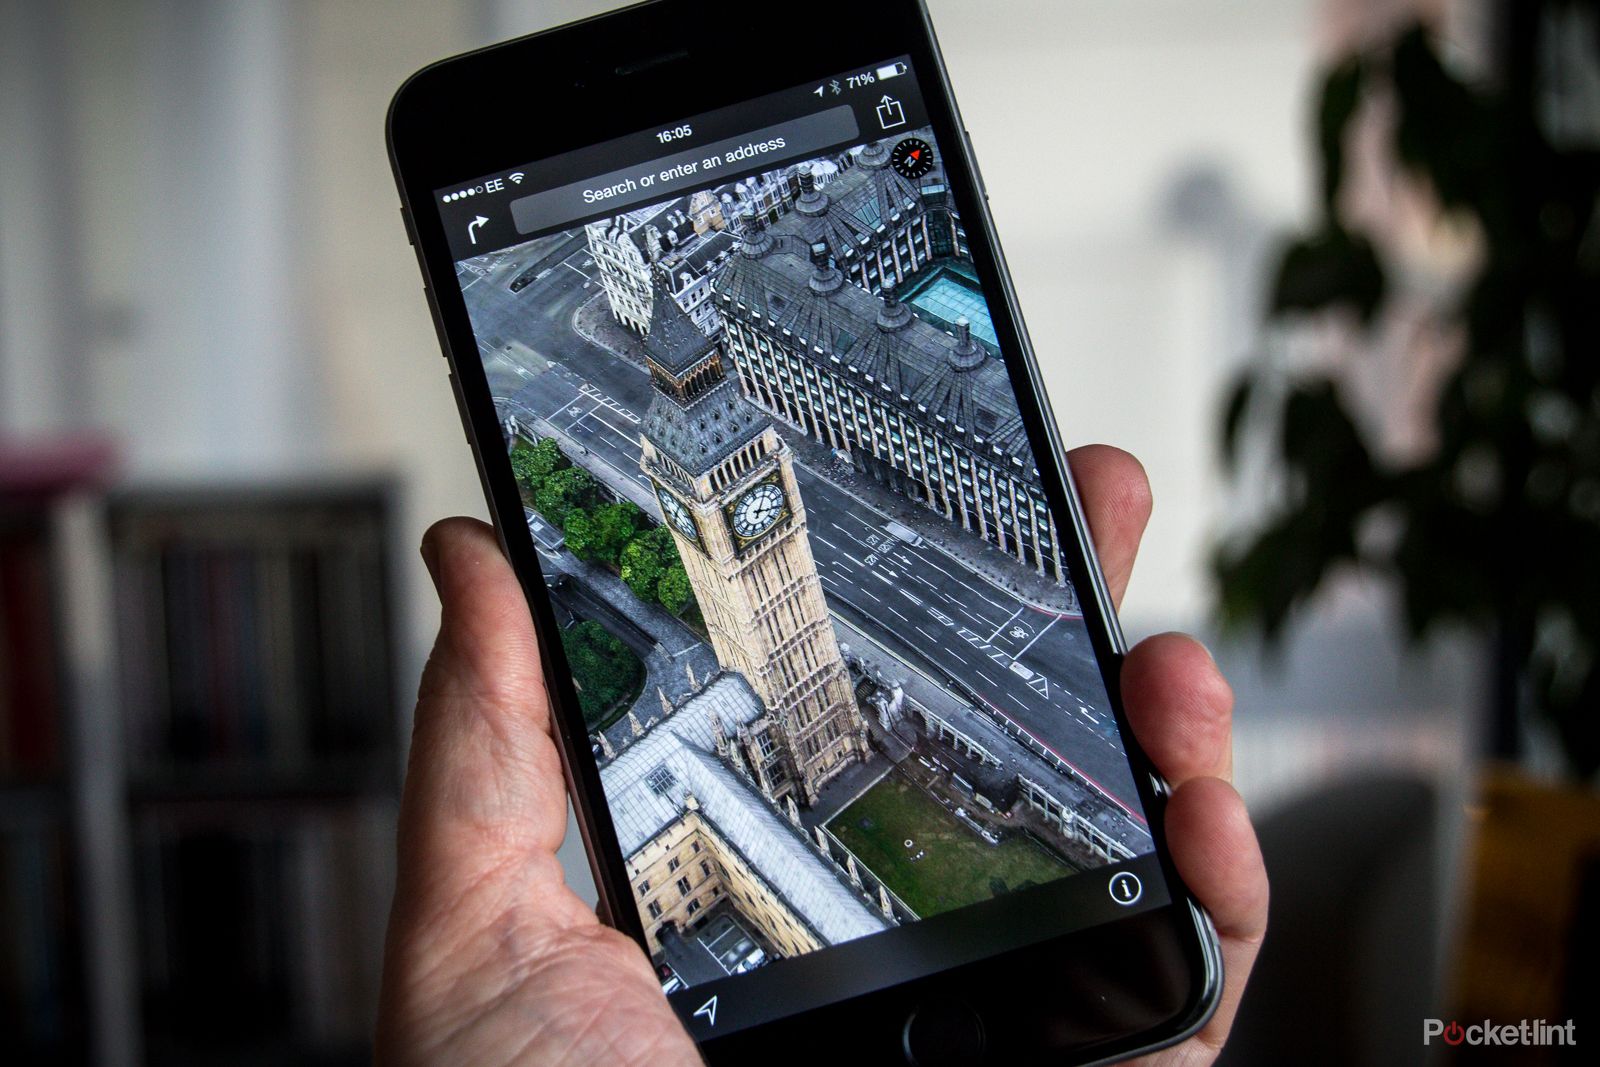 apple maps adds animated landmarks big ben tells the time and london eye rotates image 1